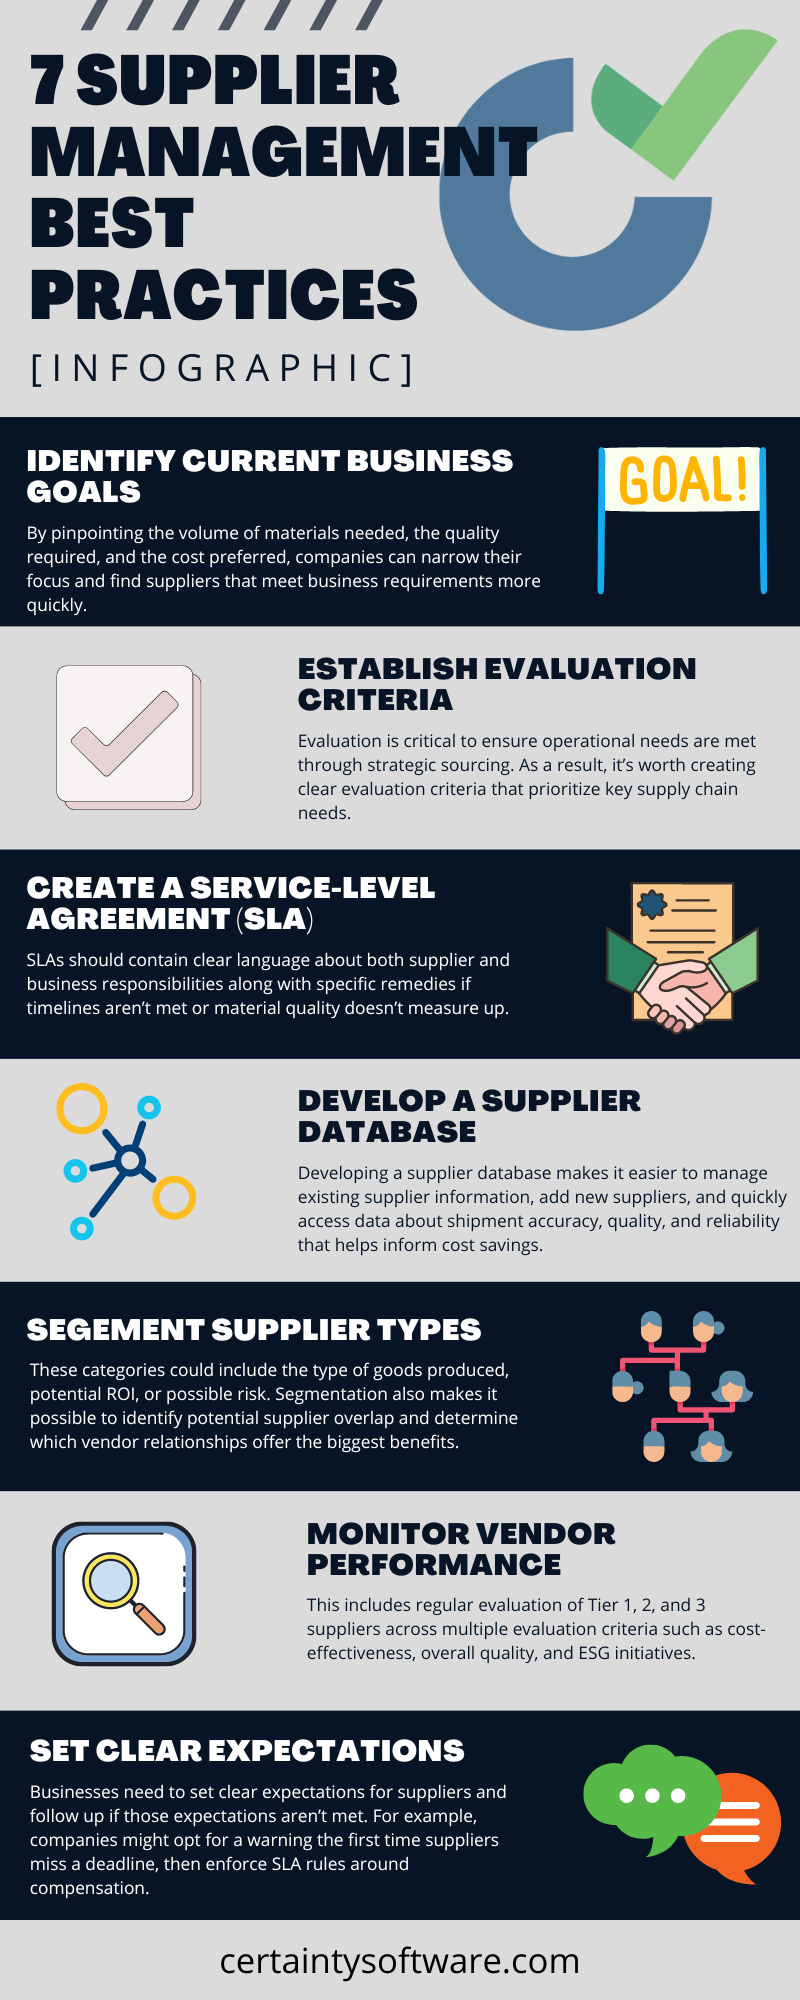 7 Supplier Management Best Practices | Certainty